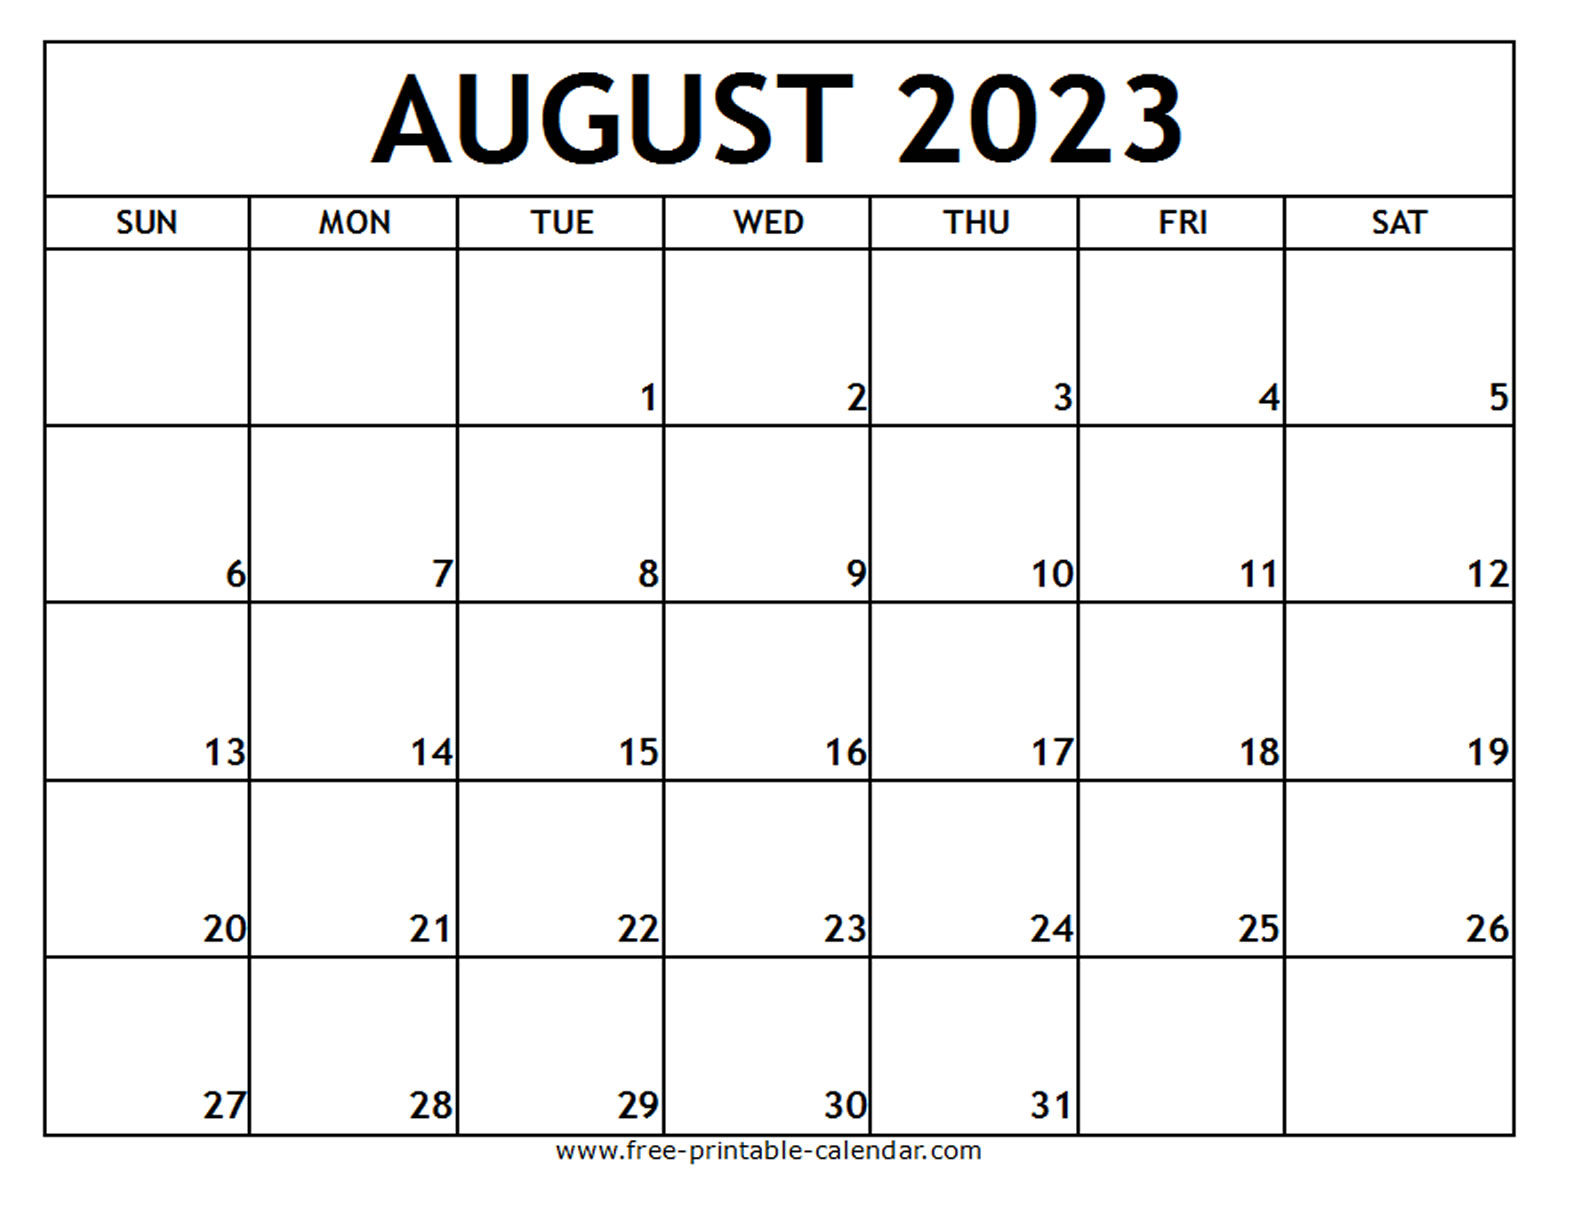 free-printable-calendar-august-2023